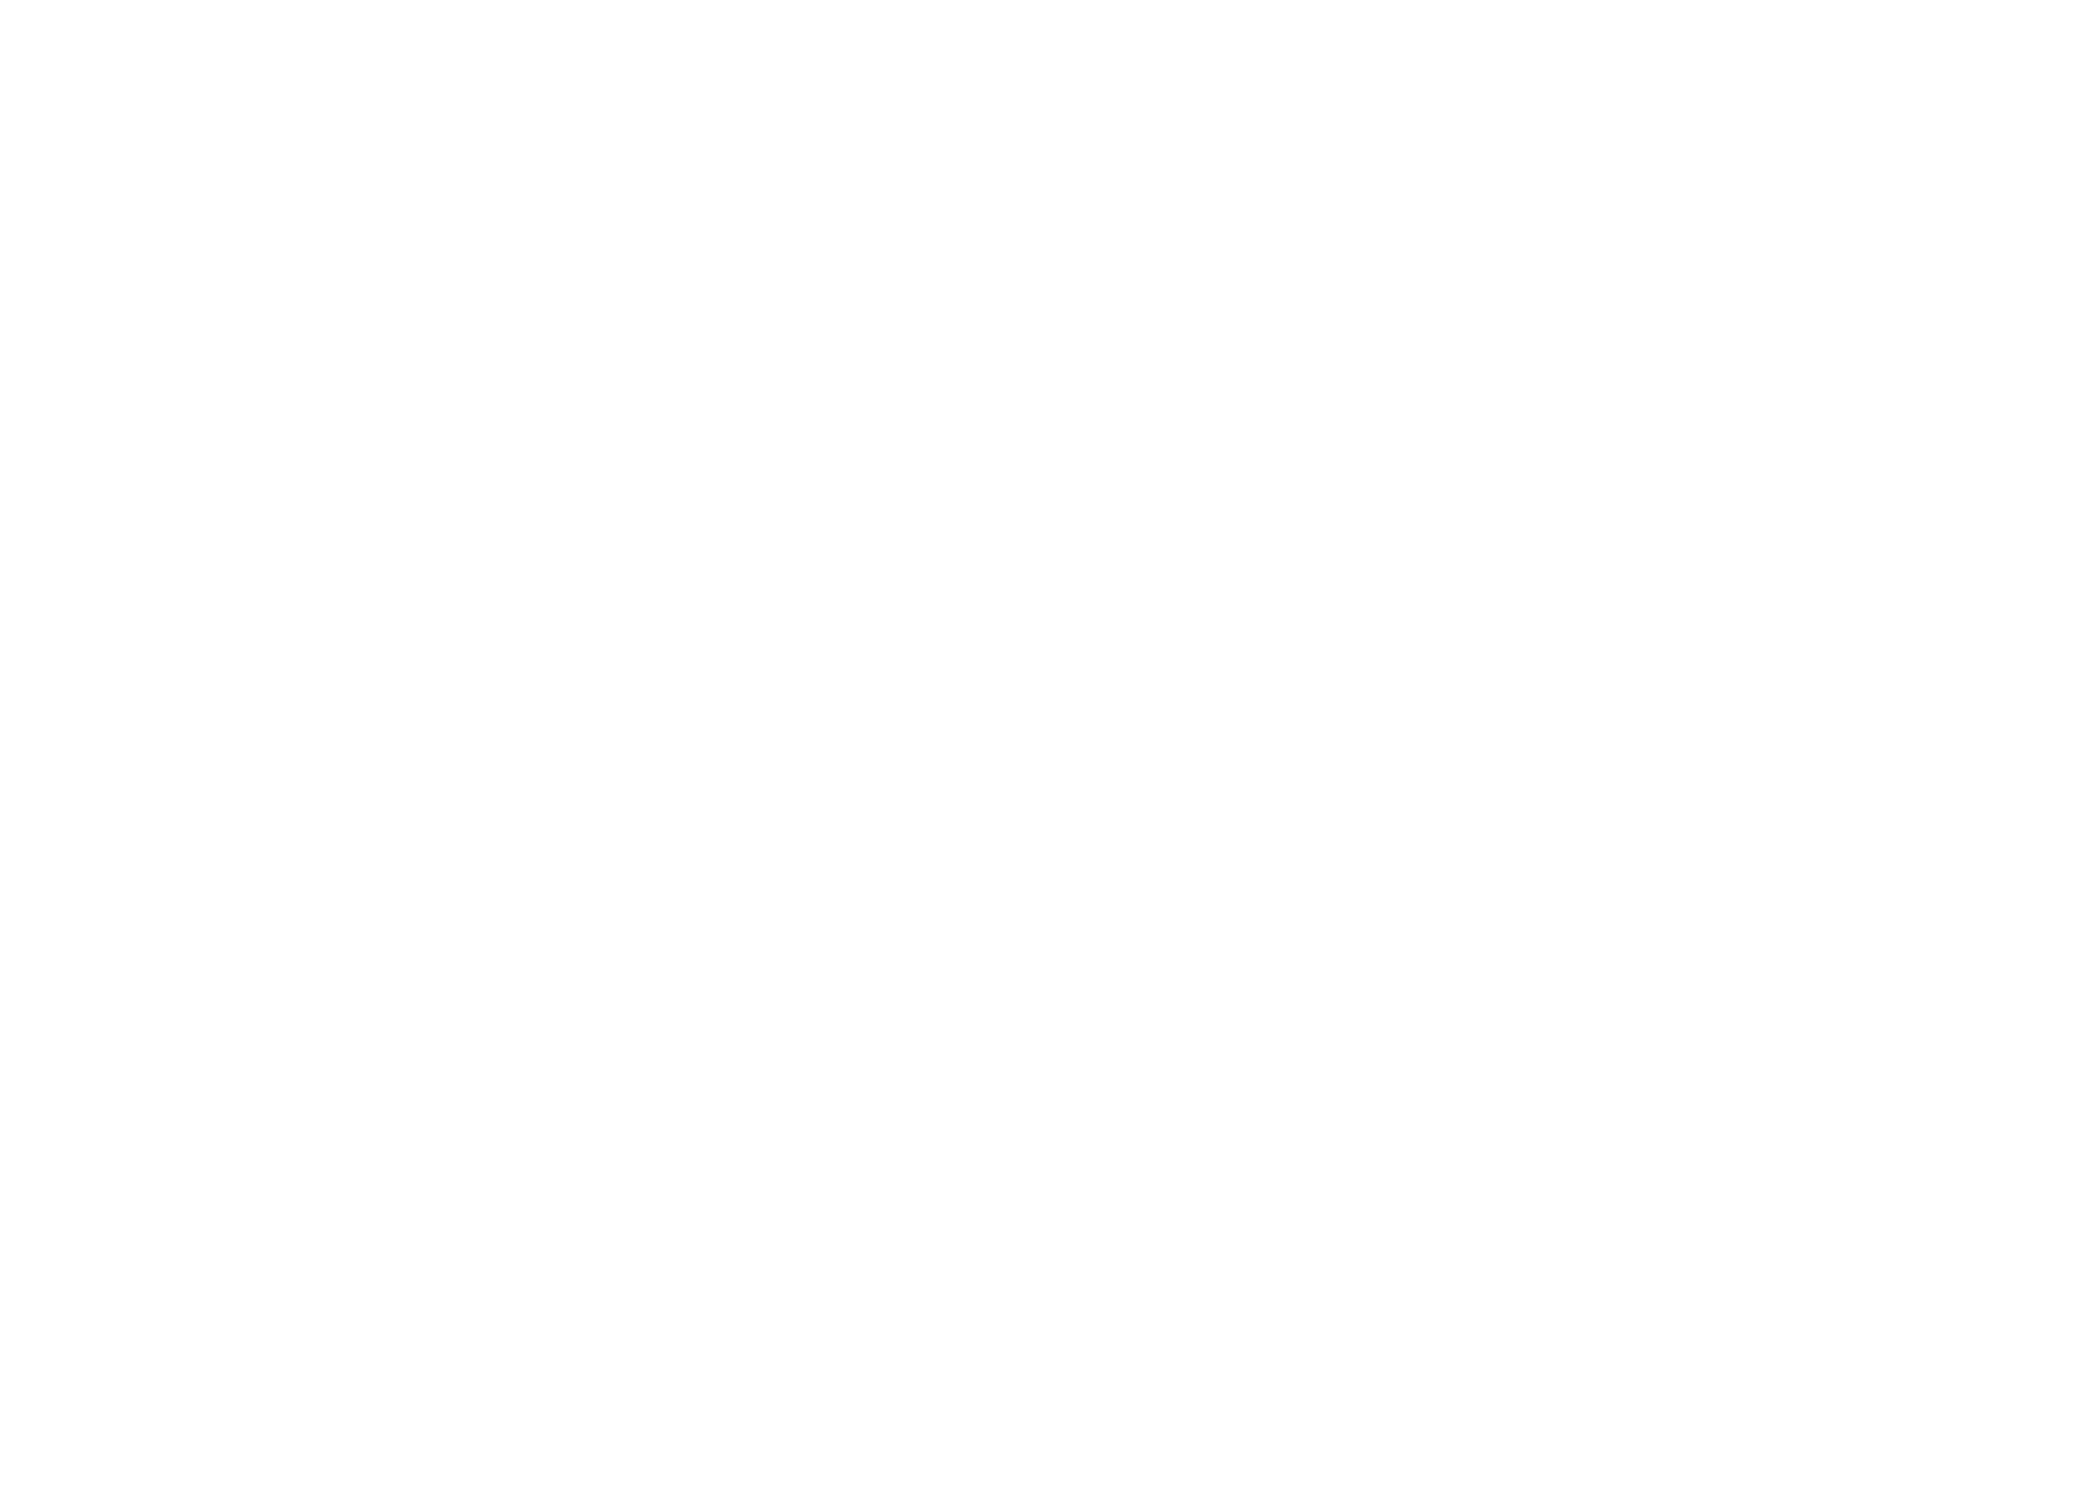 HCCS - Company Logo (New Version White Transparent)